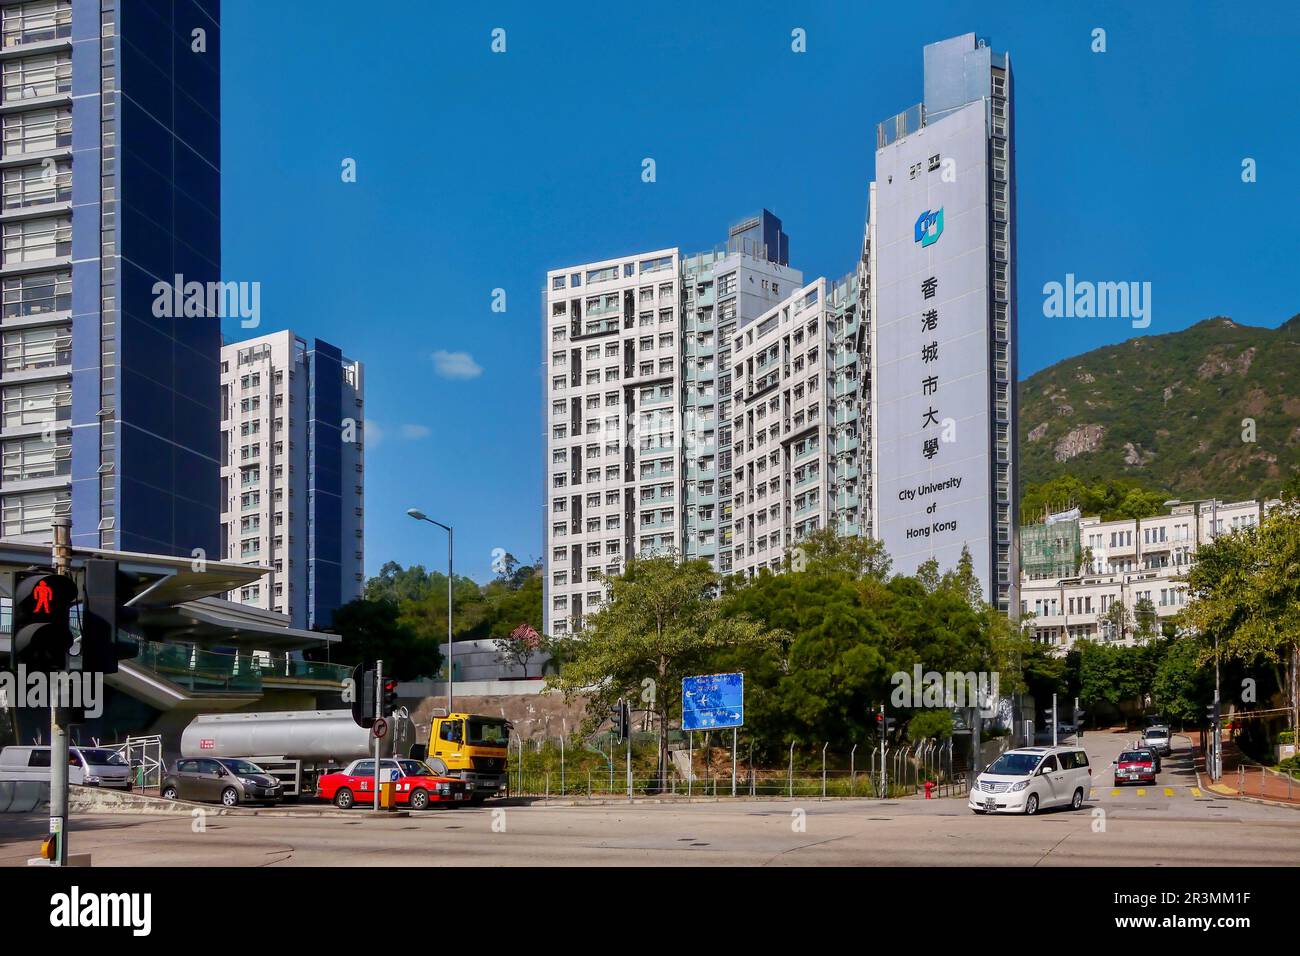 Kowloon Tong, Hong Kong - 15 dicembre 2014. Un gruppo di edifici di residenza per studenti per la City University di Hong Kong. Foto Stock